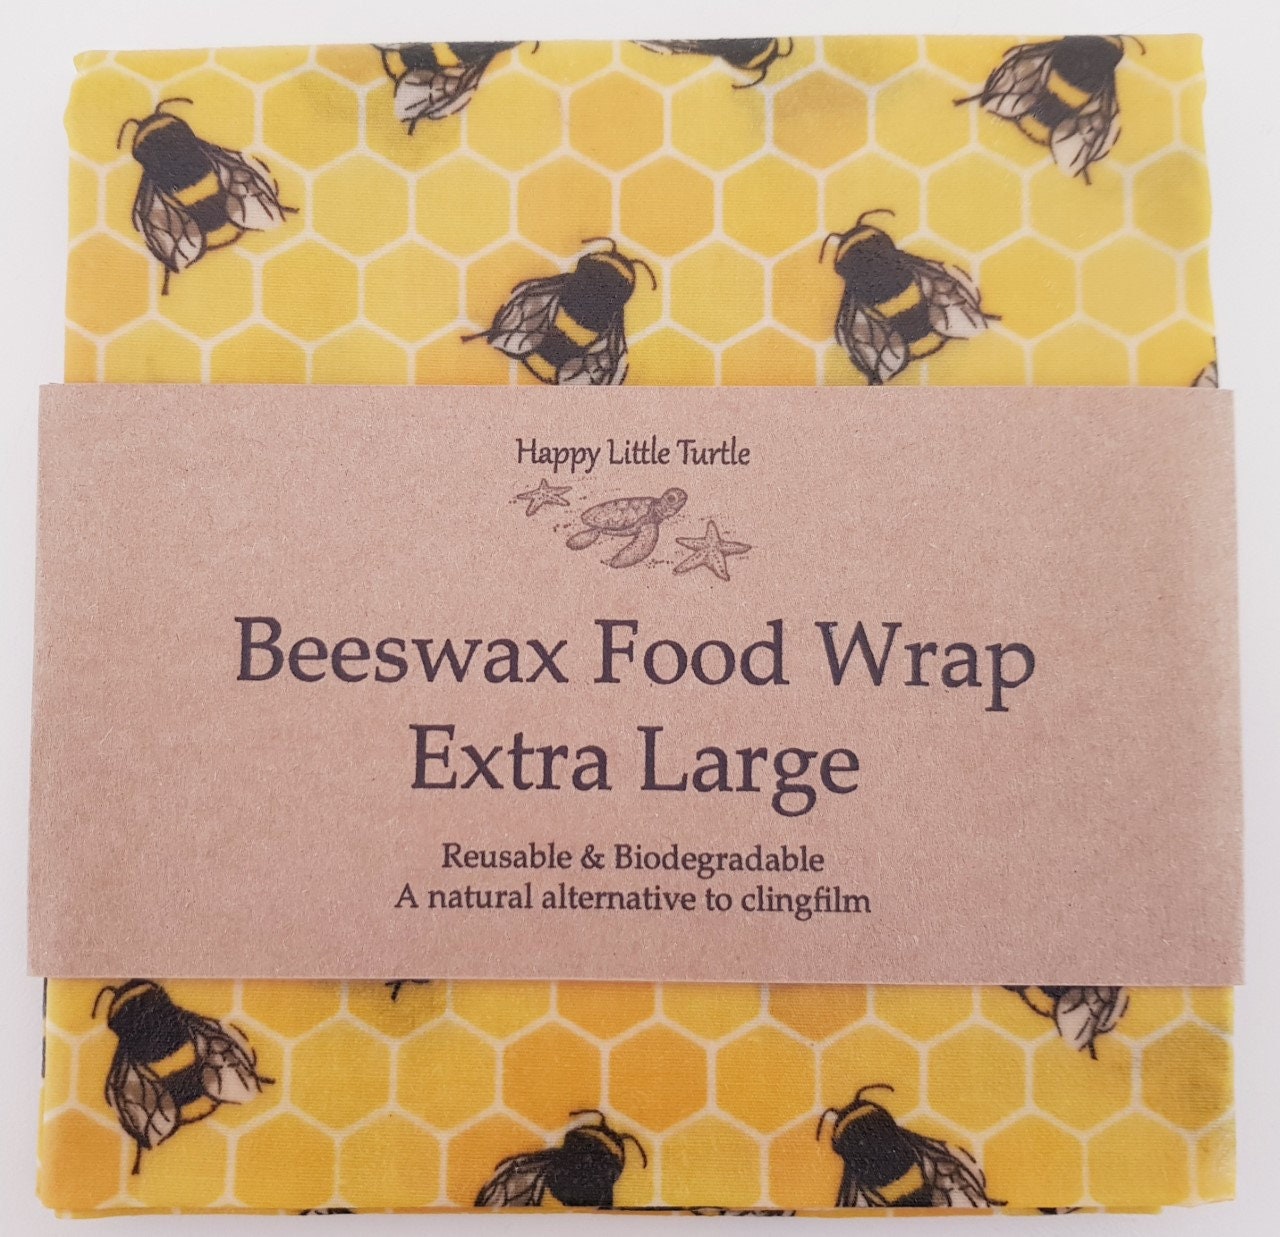 Bees Wax Wraps Reusable Plastic Free Zero Waste Organic Food Wrap